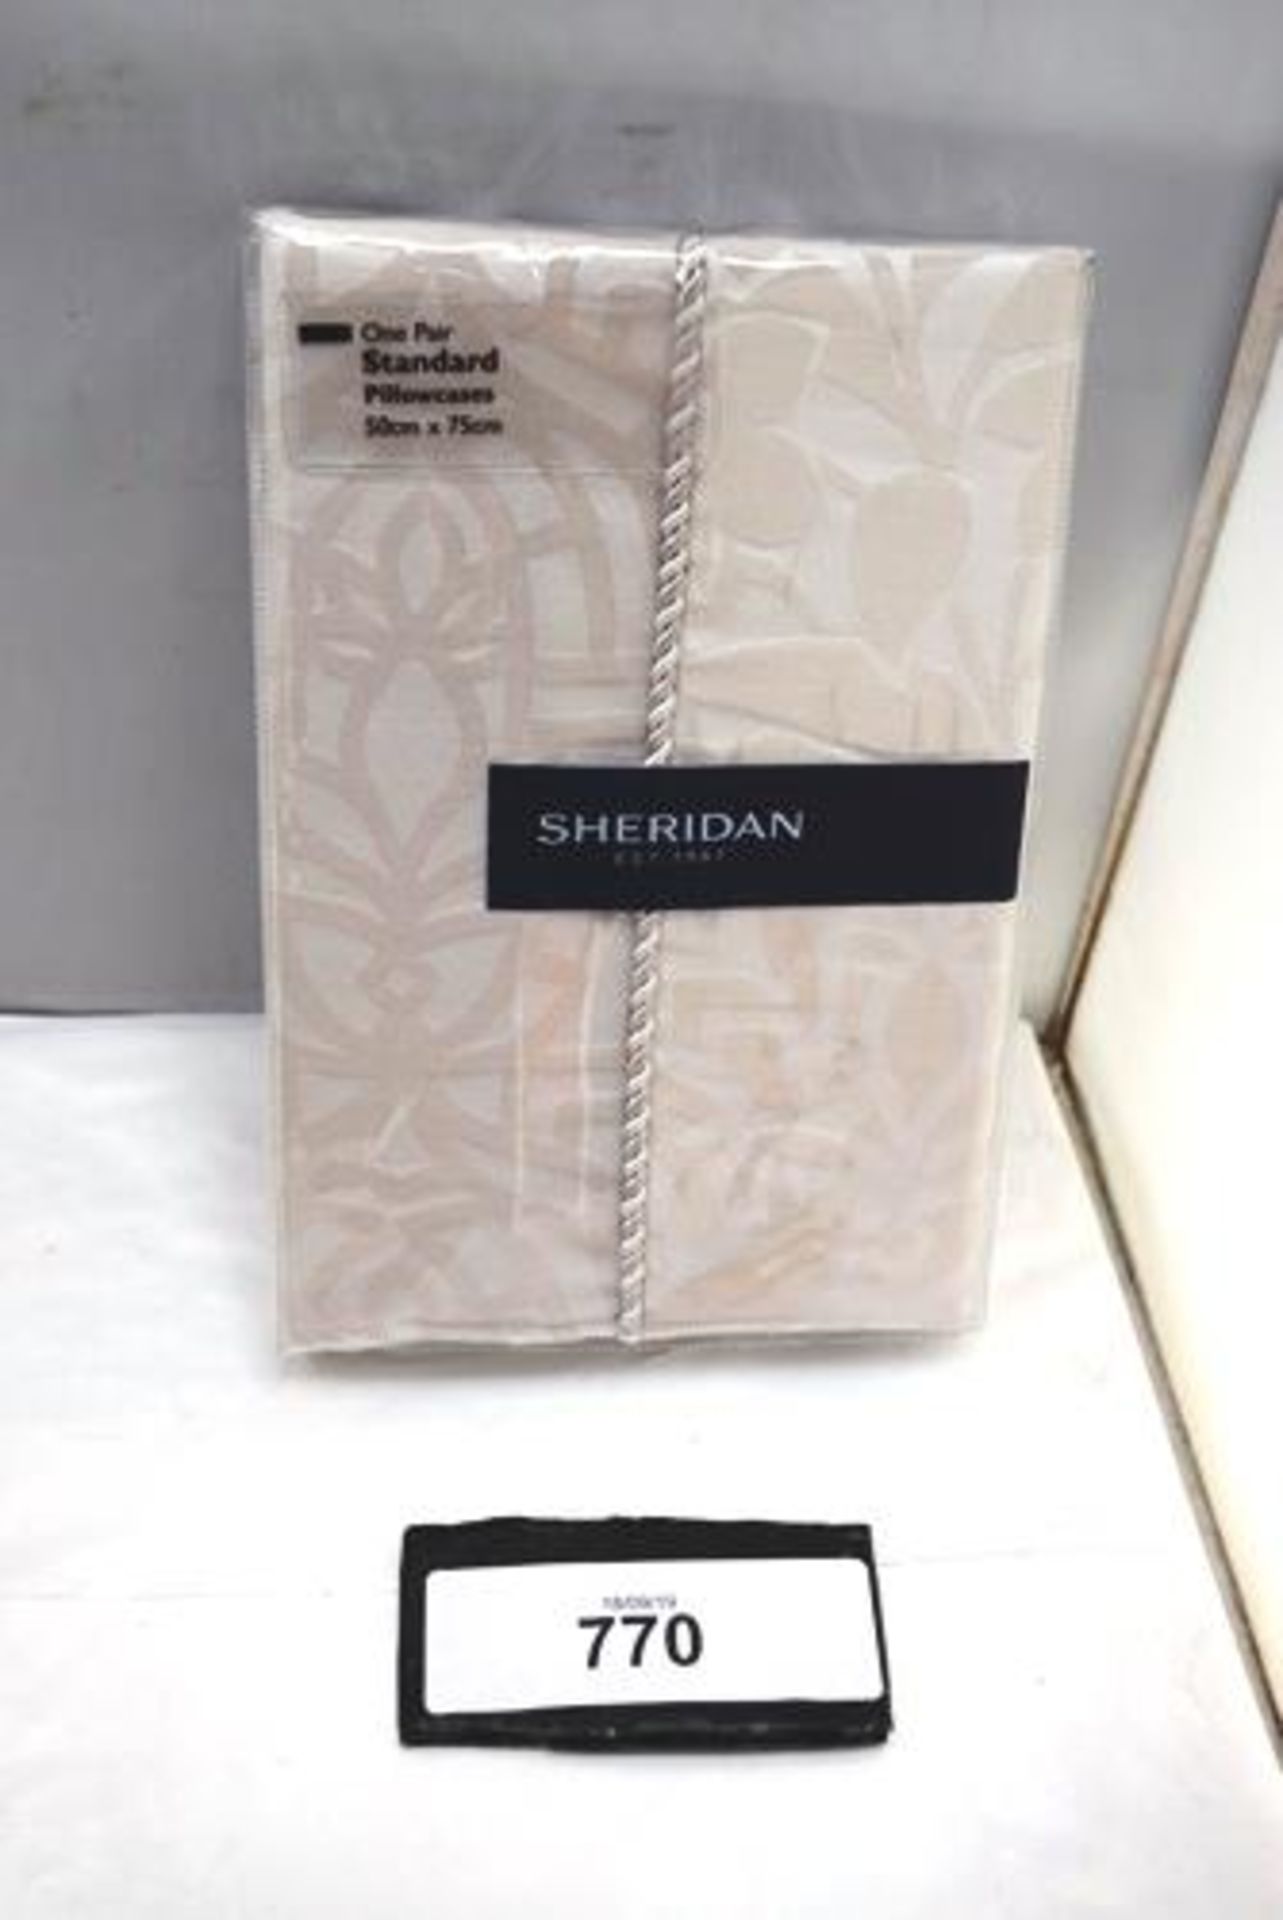 4 x packs of Sheridan snow super fine sateen standard pillowcases, RRP £29.00 each - New in pack (